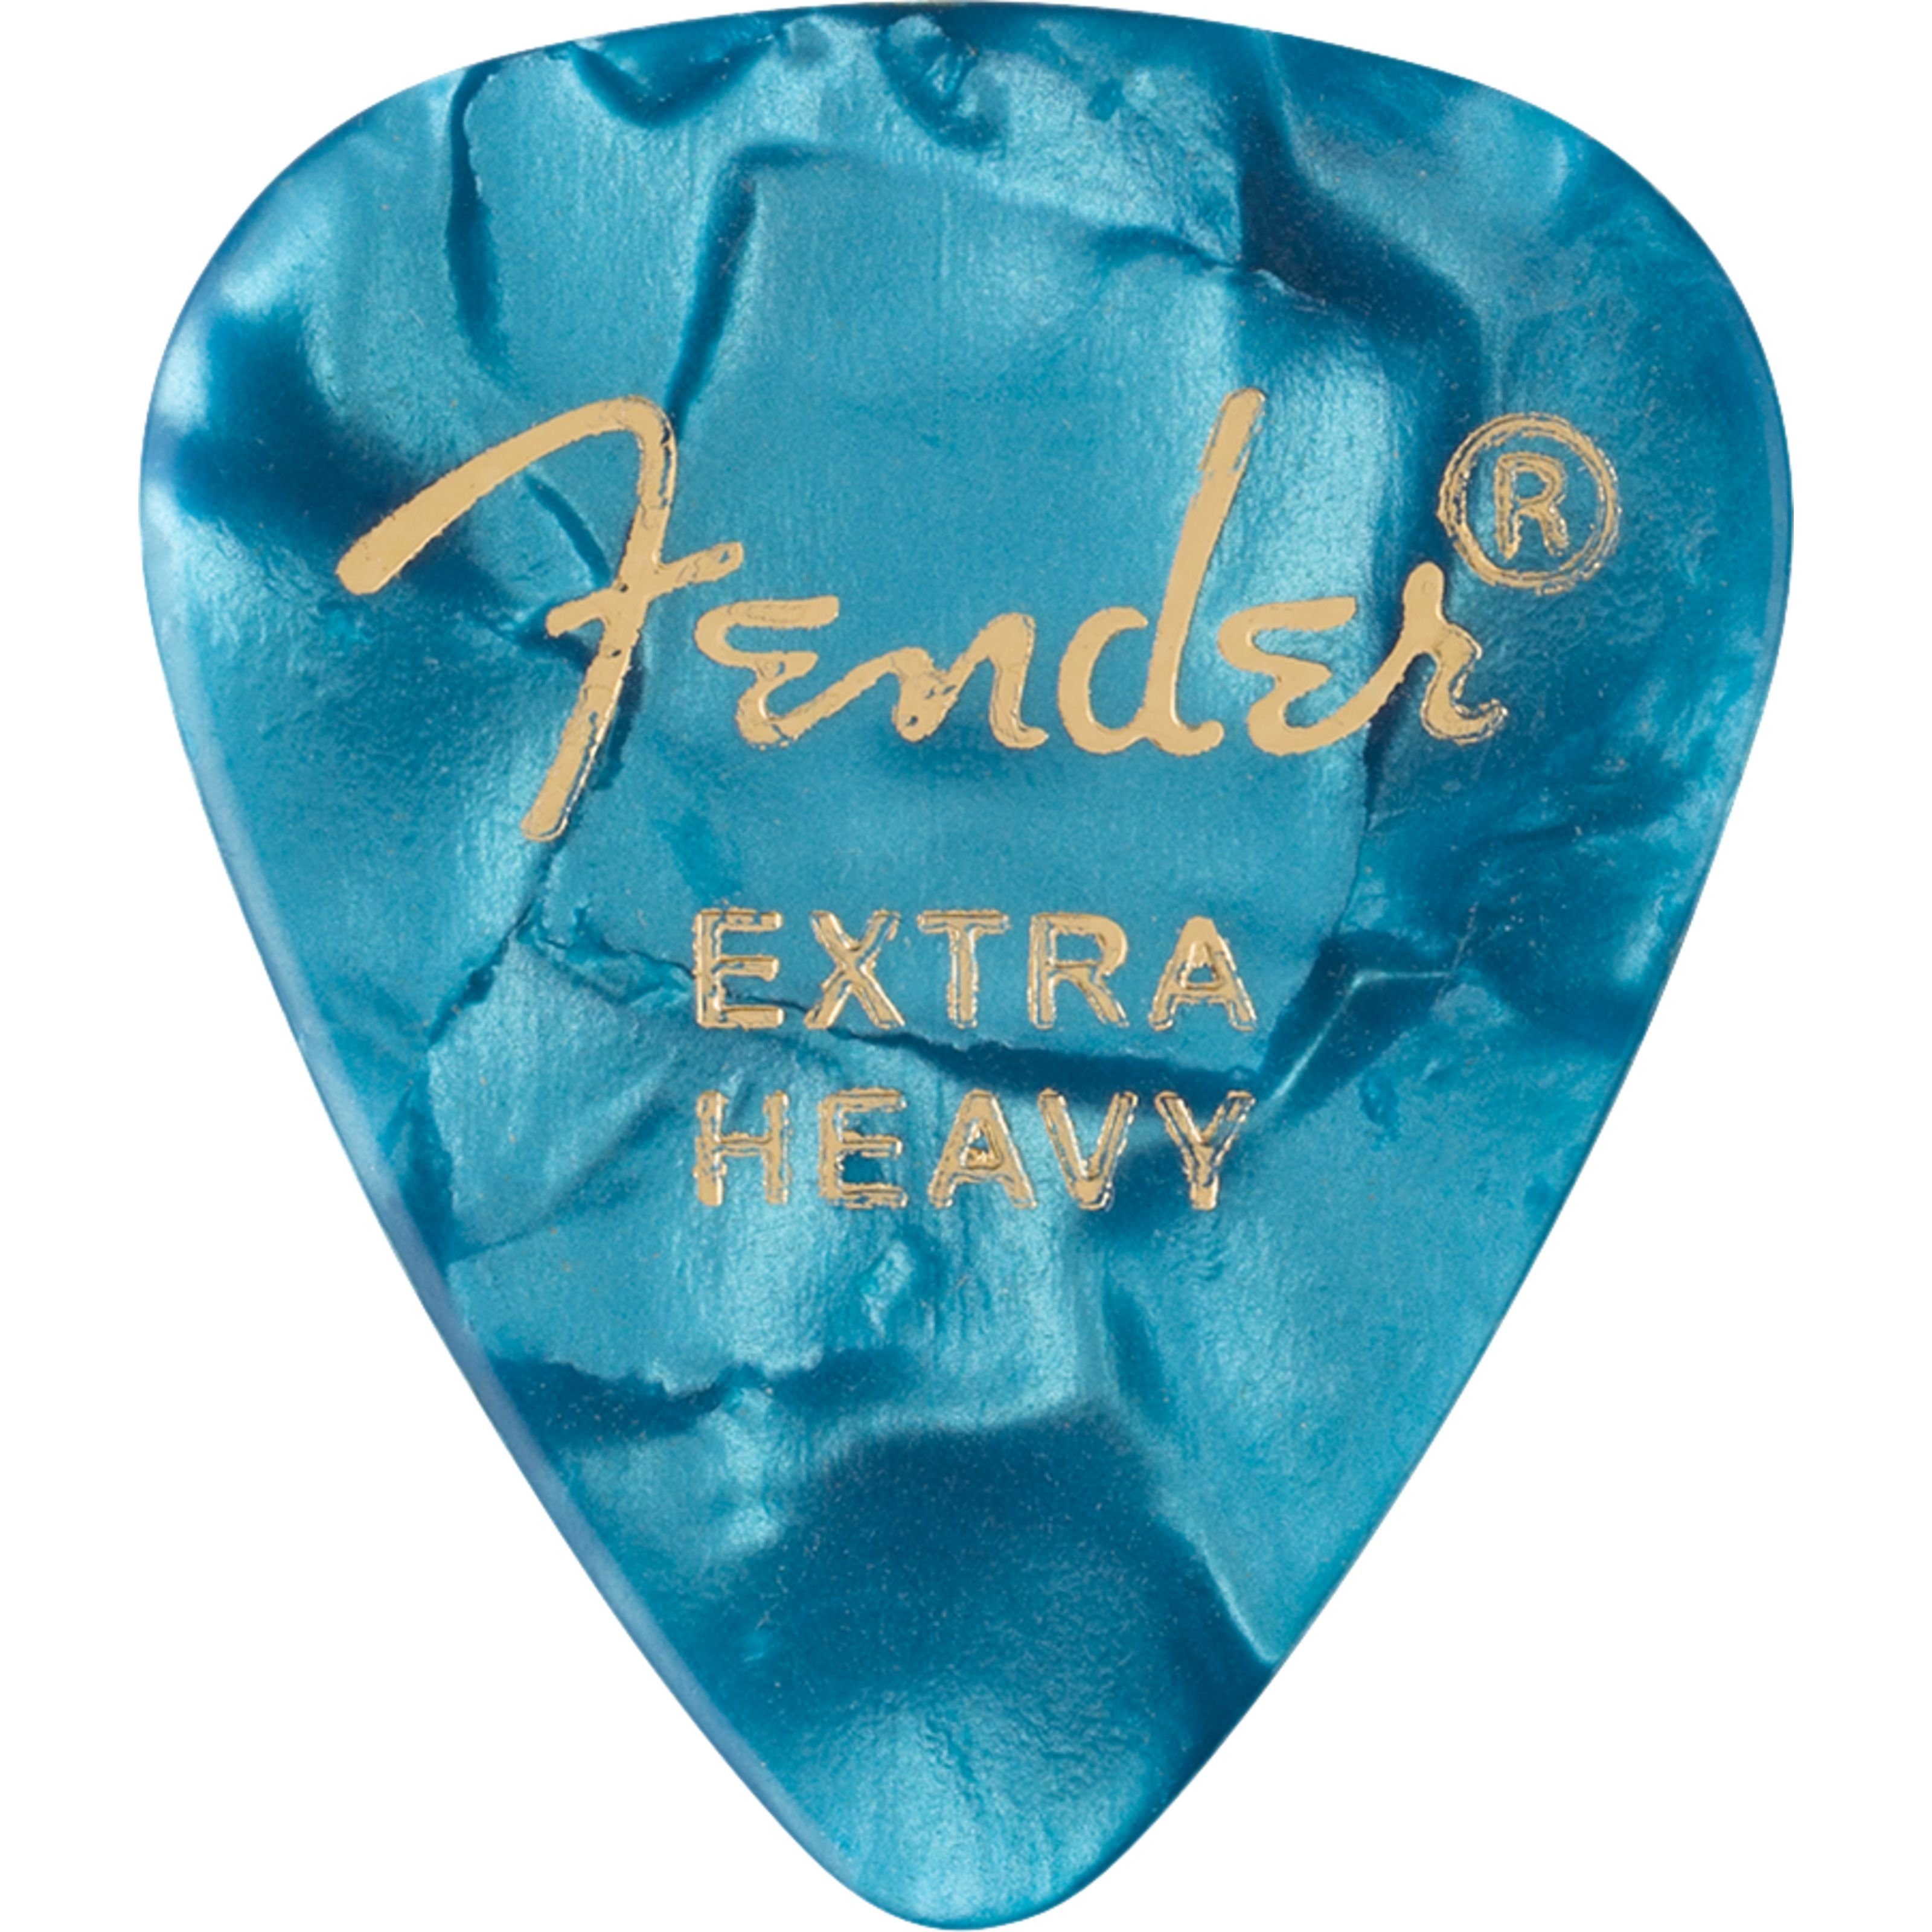 Fender Spielzeug-Musikinstrument, Picks Plektren Turquoise 351 Extra Ocean Heavy - Set